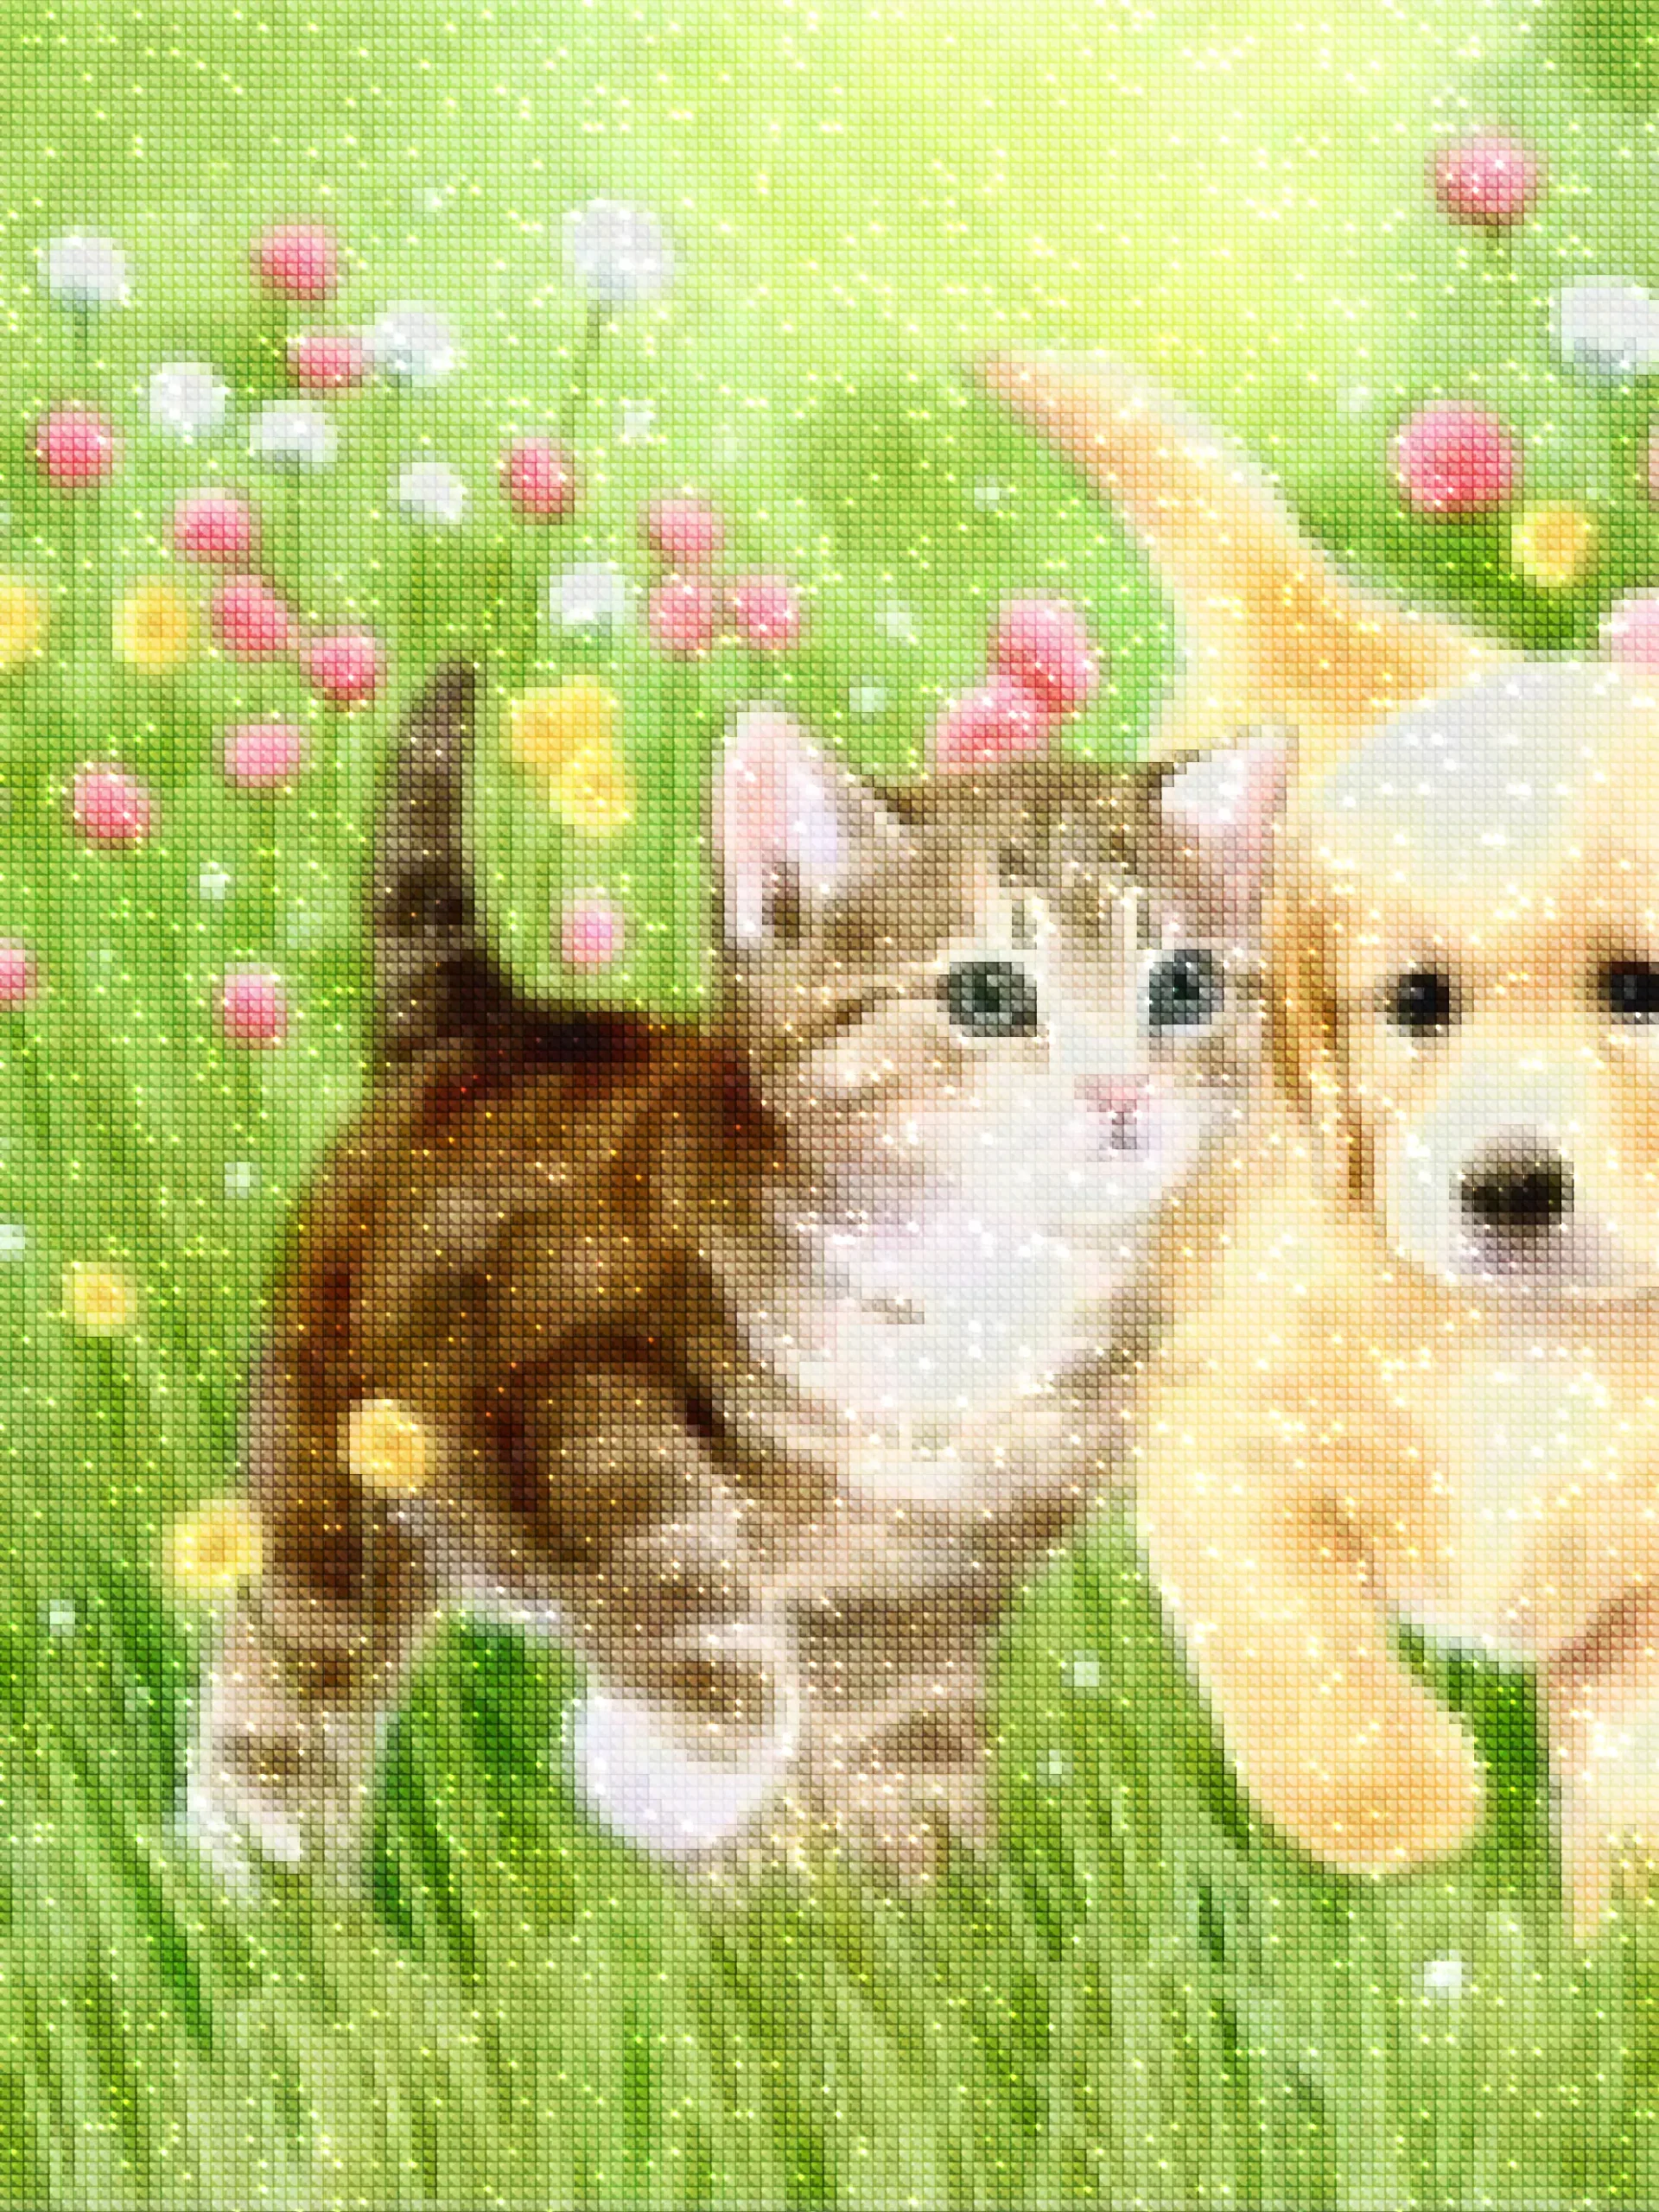 Diamonds-Wizard-Diamond-Painting-Kits-Animals-Cat-A Playful Puppy and Kitten in a Field of Flowers-diamonds.webp